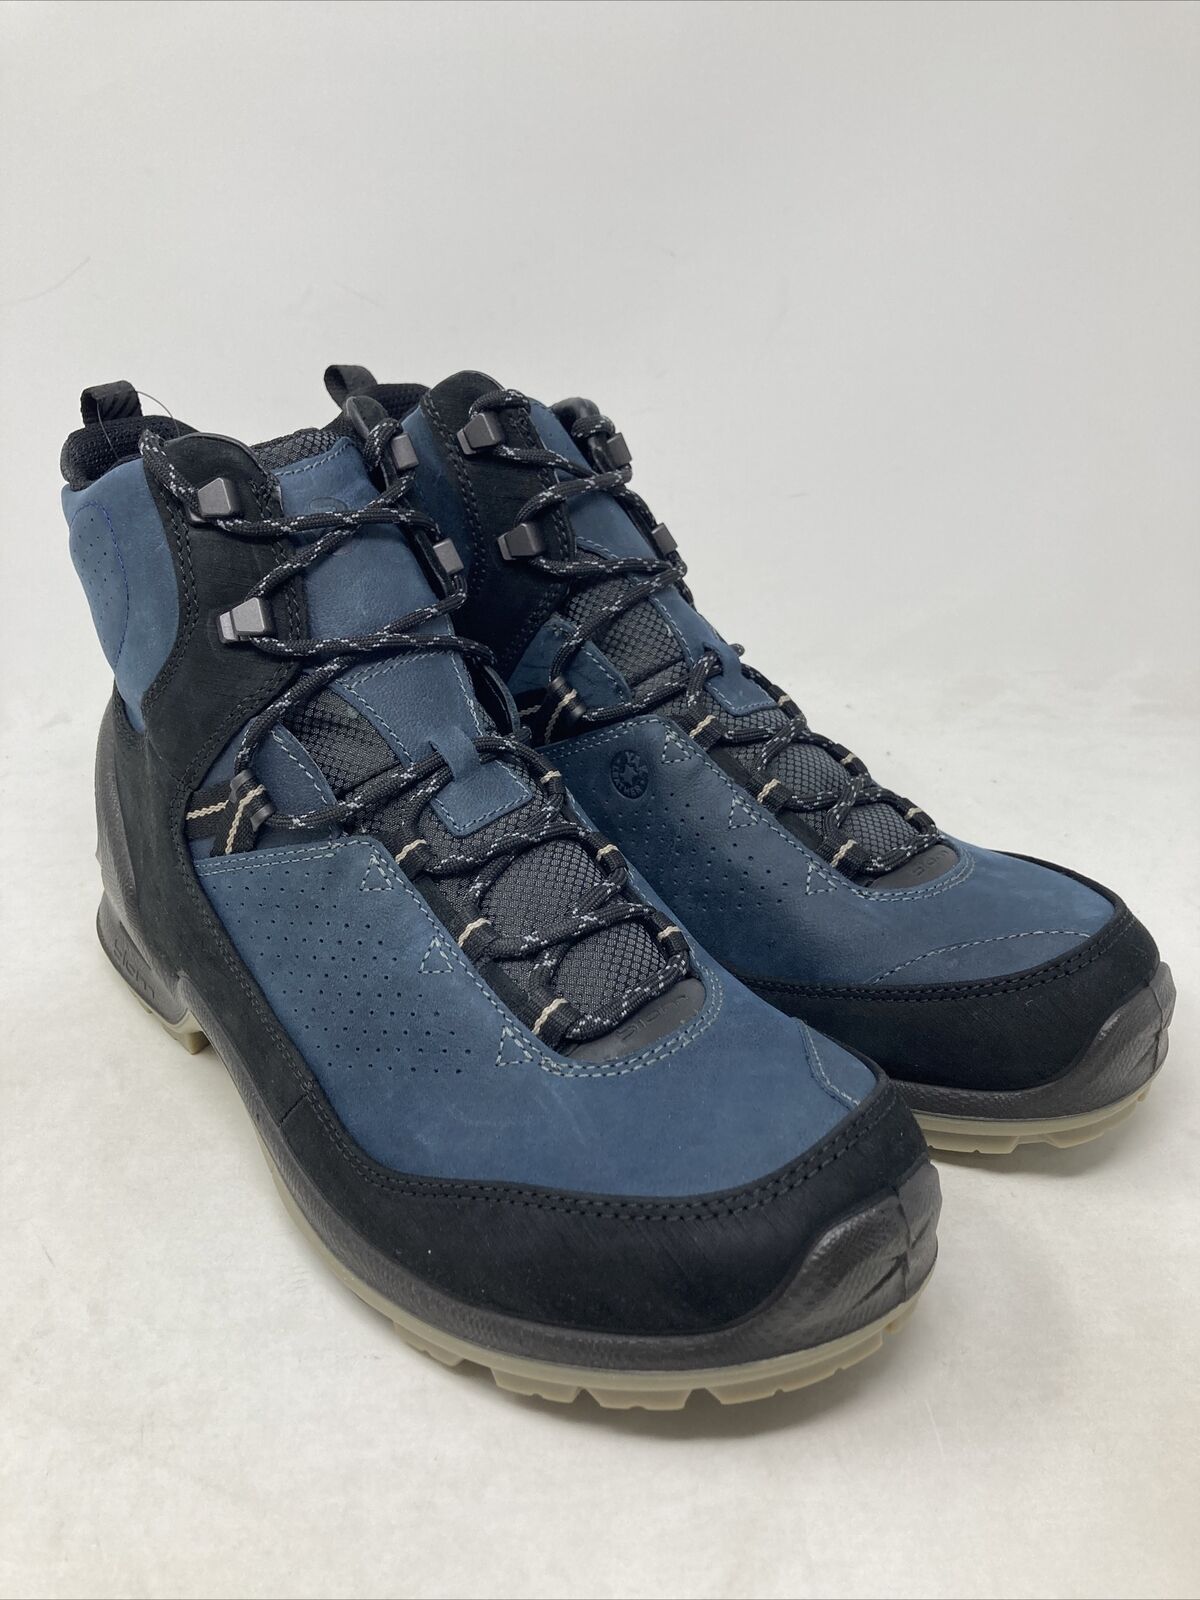 Ecco Men’s Biom Terrain Gore-Tex High Waterproof Hiking Boots Size 44 EU 10 US